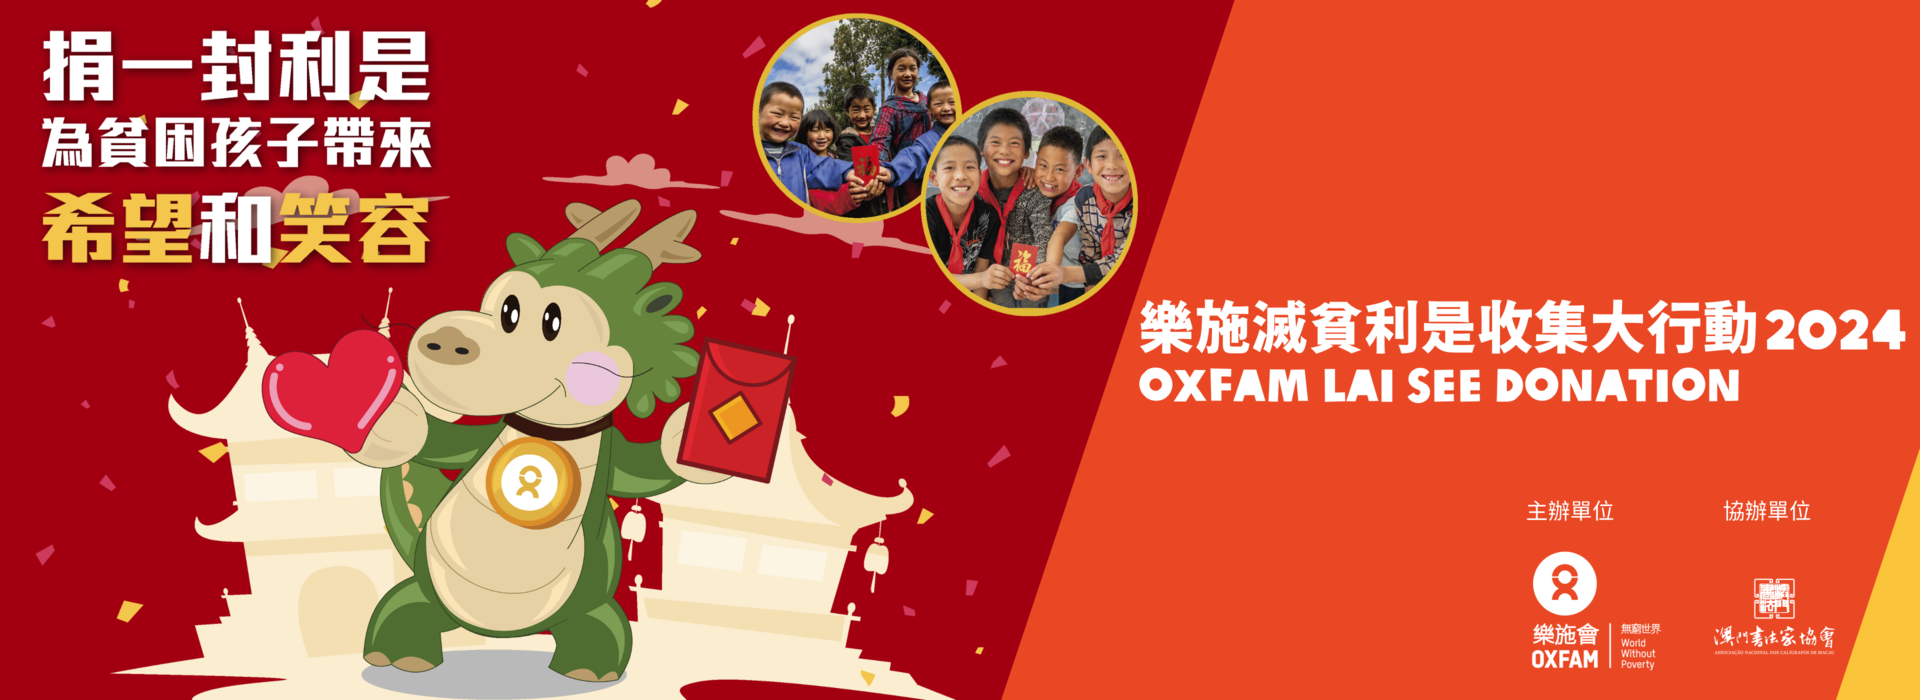 (Macau) Oxfam Lai See Donation  2024